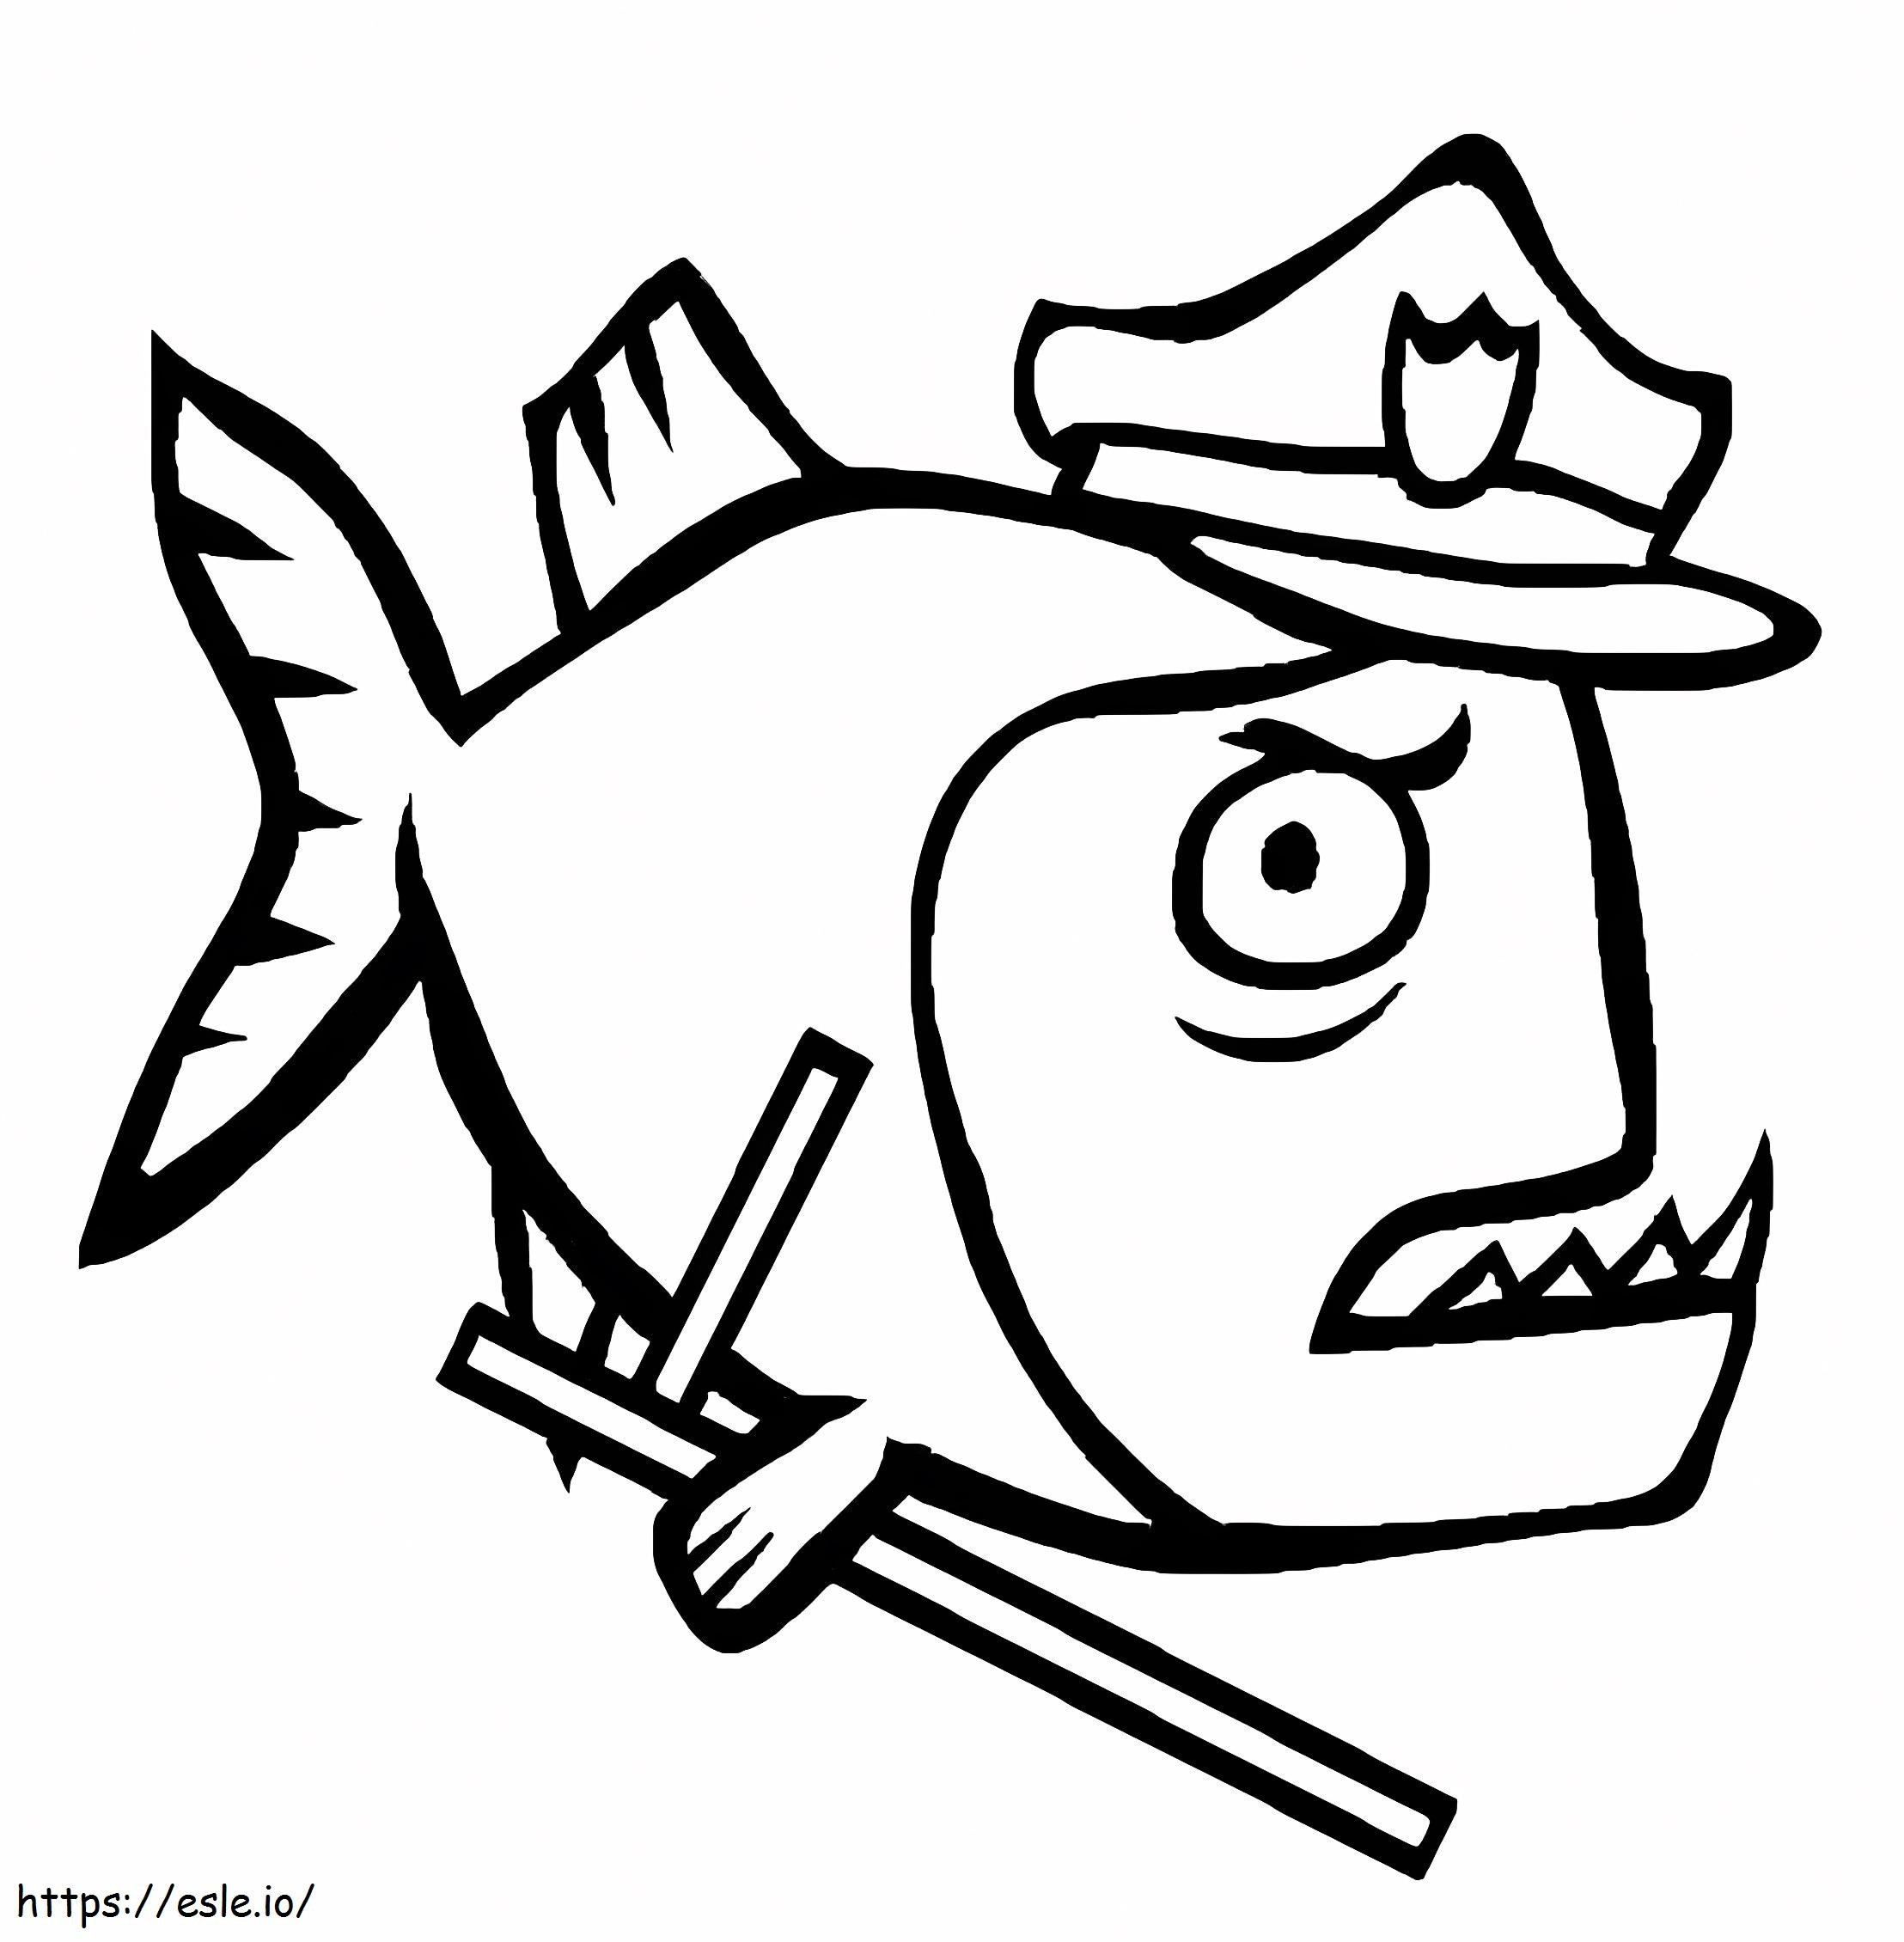 Piranha Police coloring page